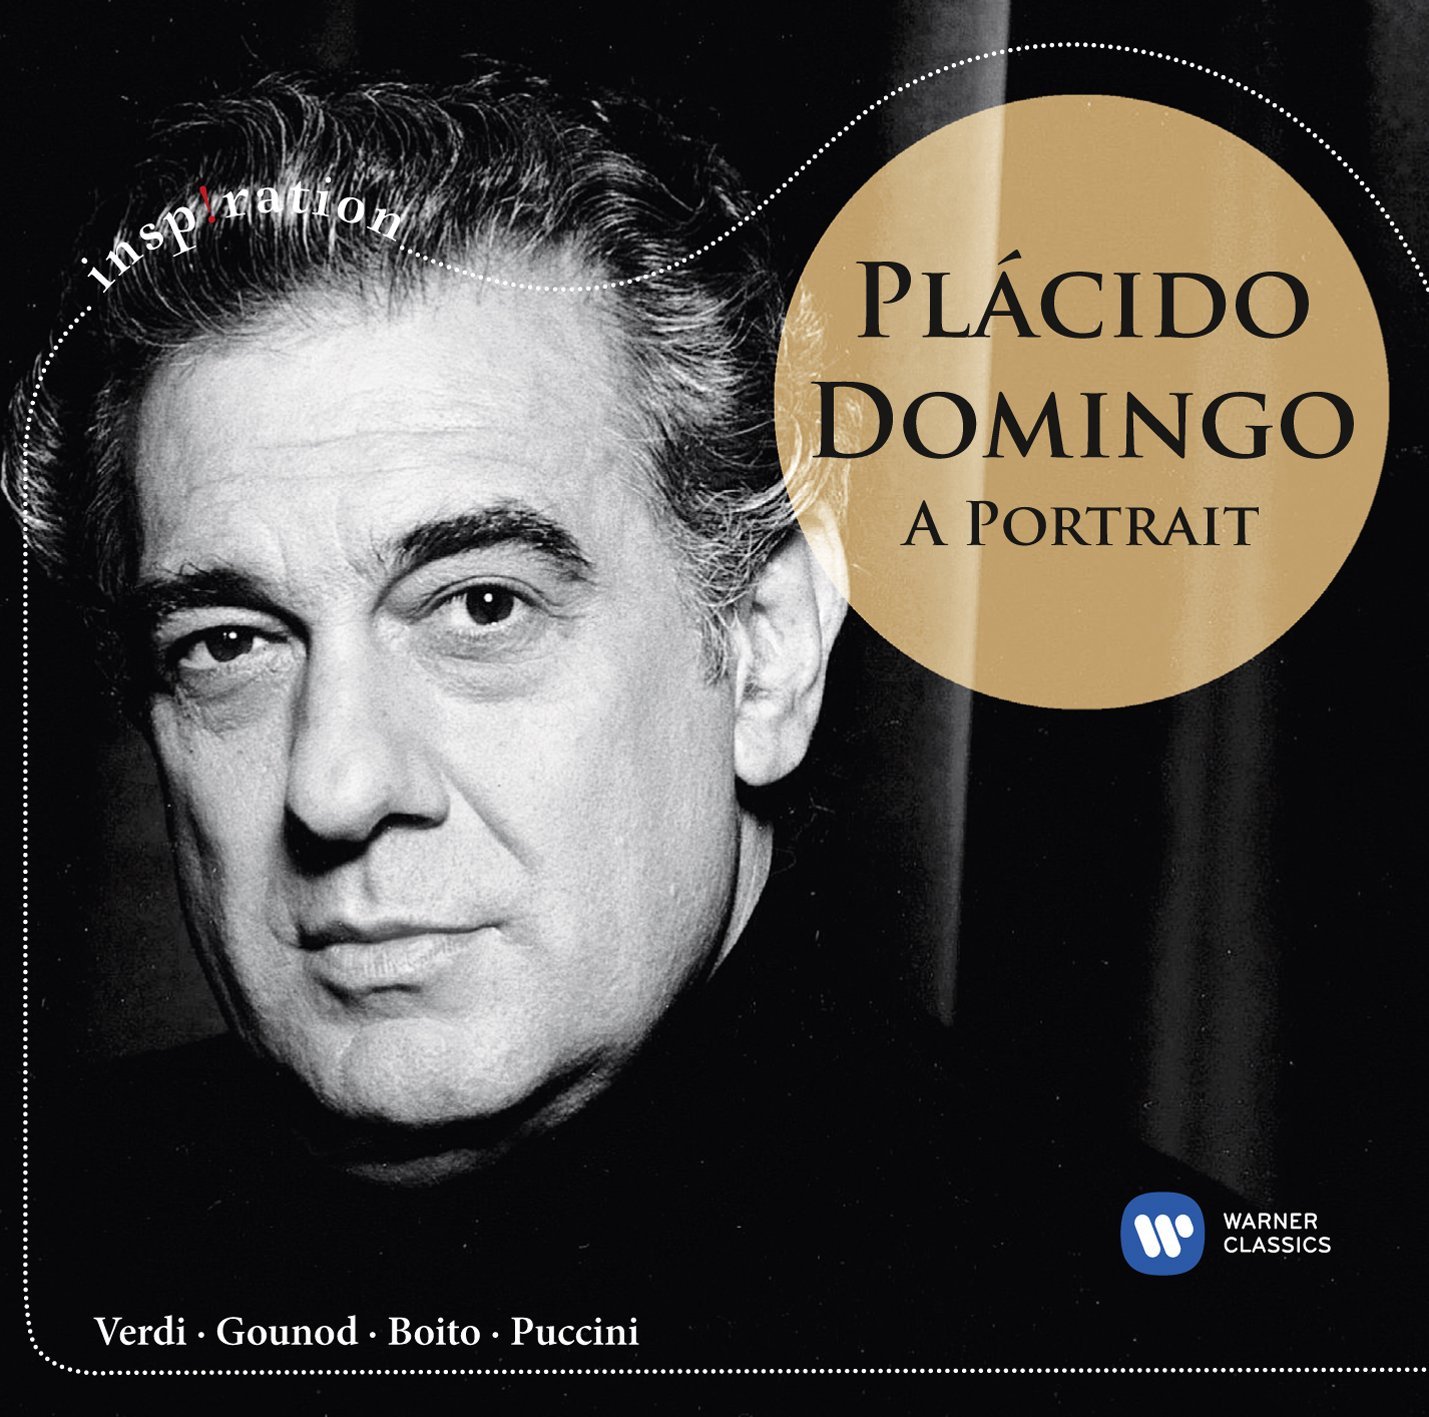 A Portrait | Placido Domingo